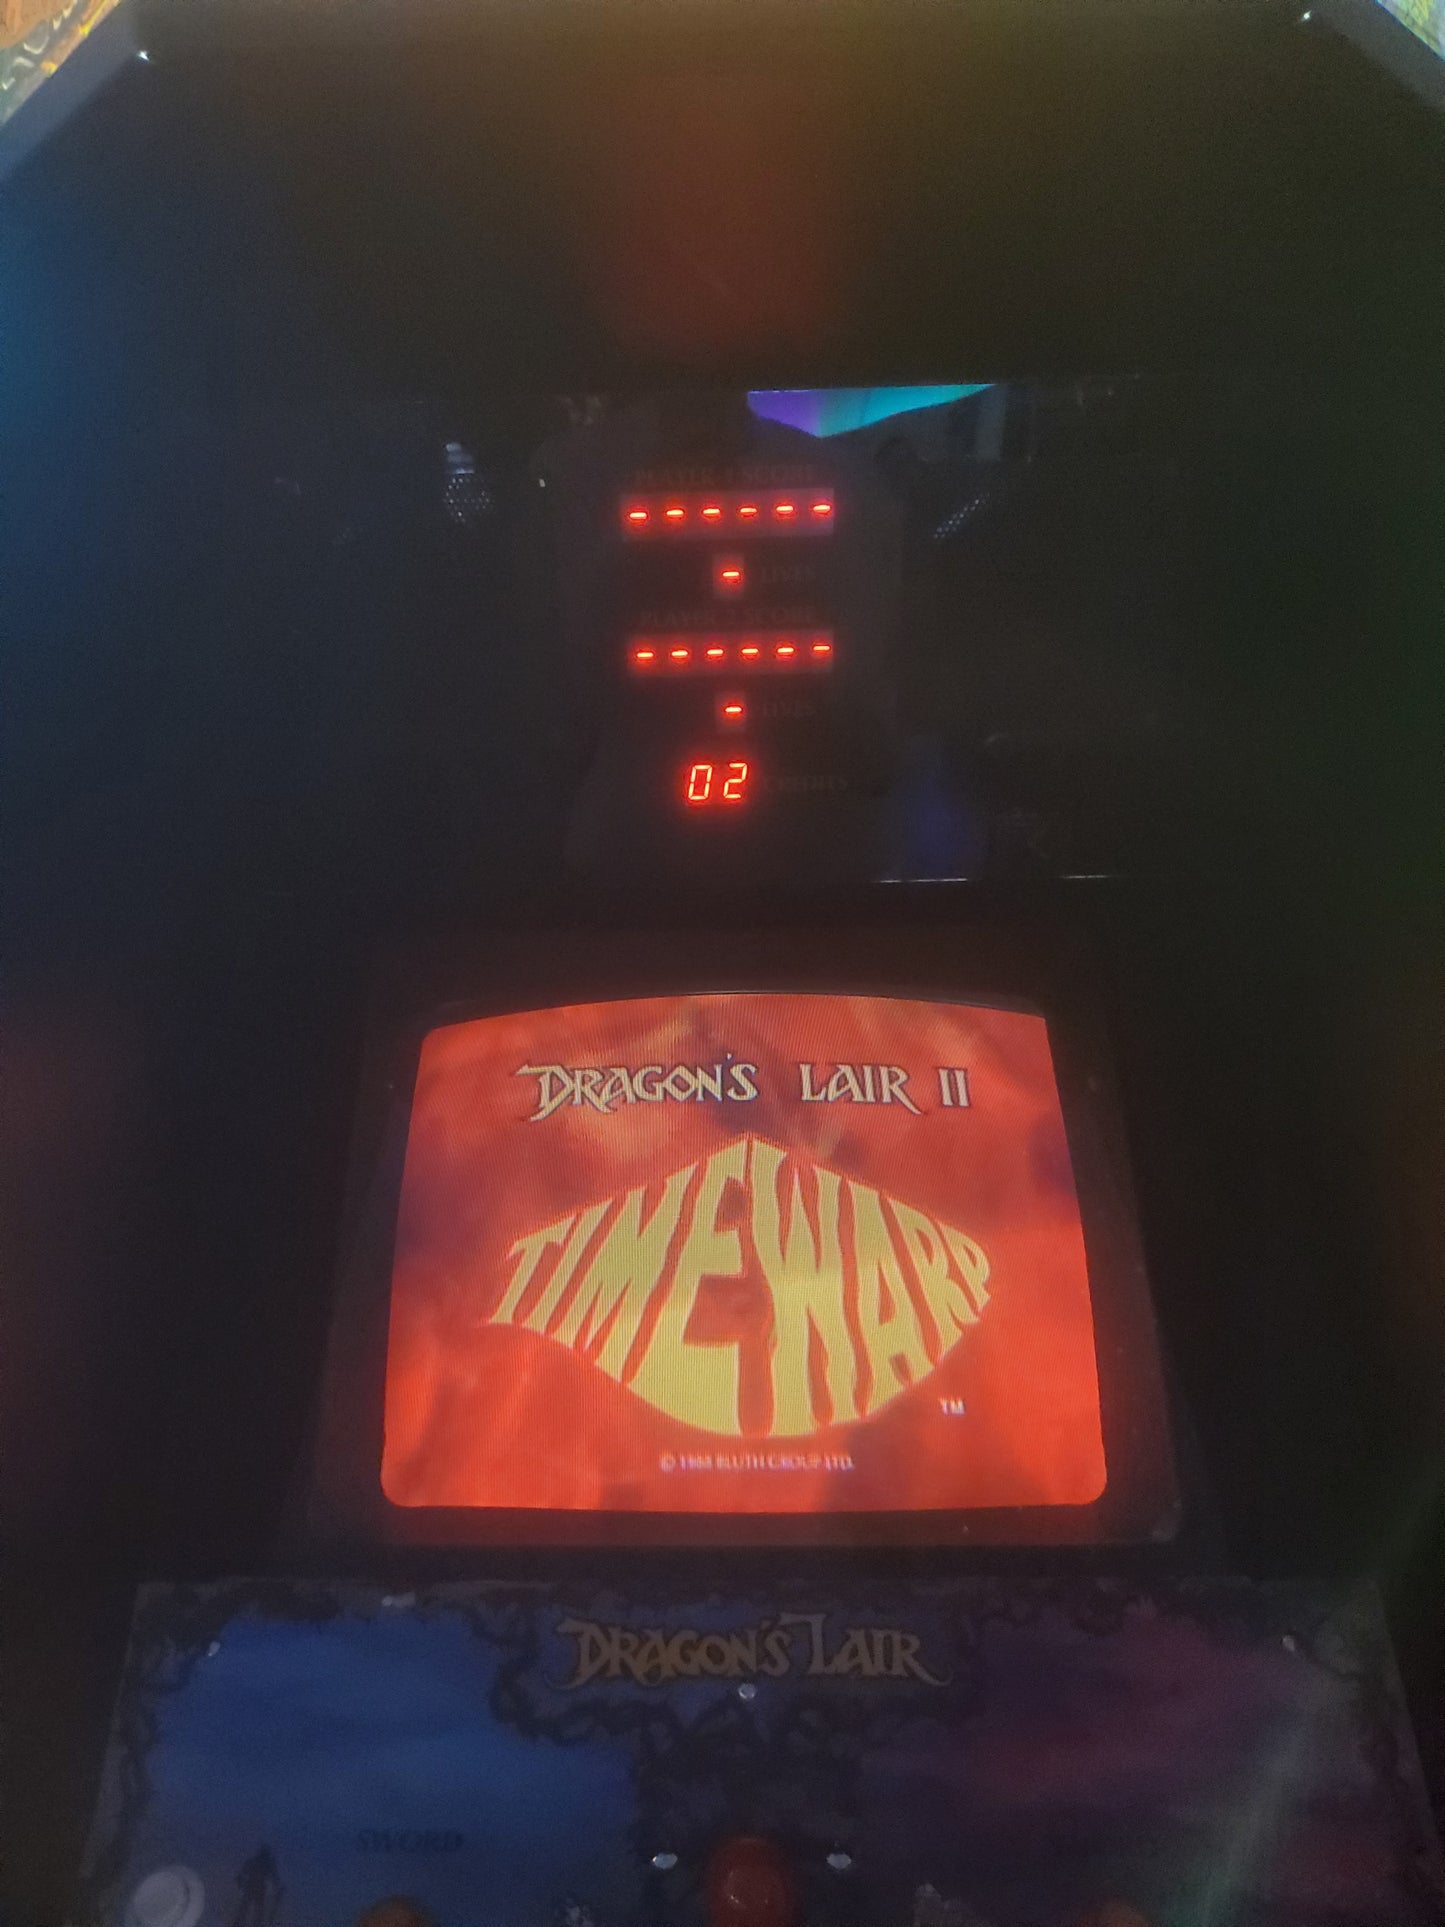 Dragon's Lair - Scoreboard / Score Display